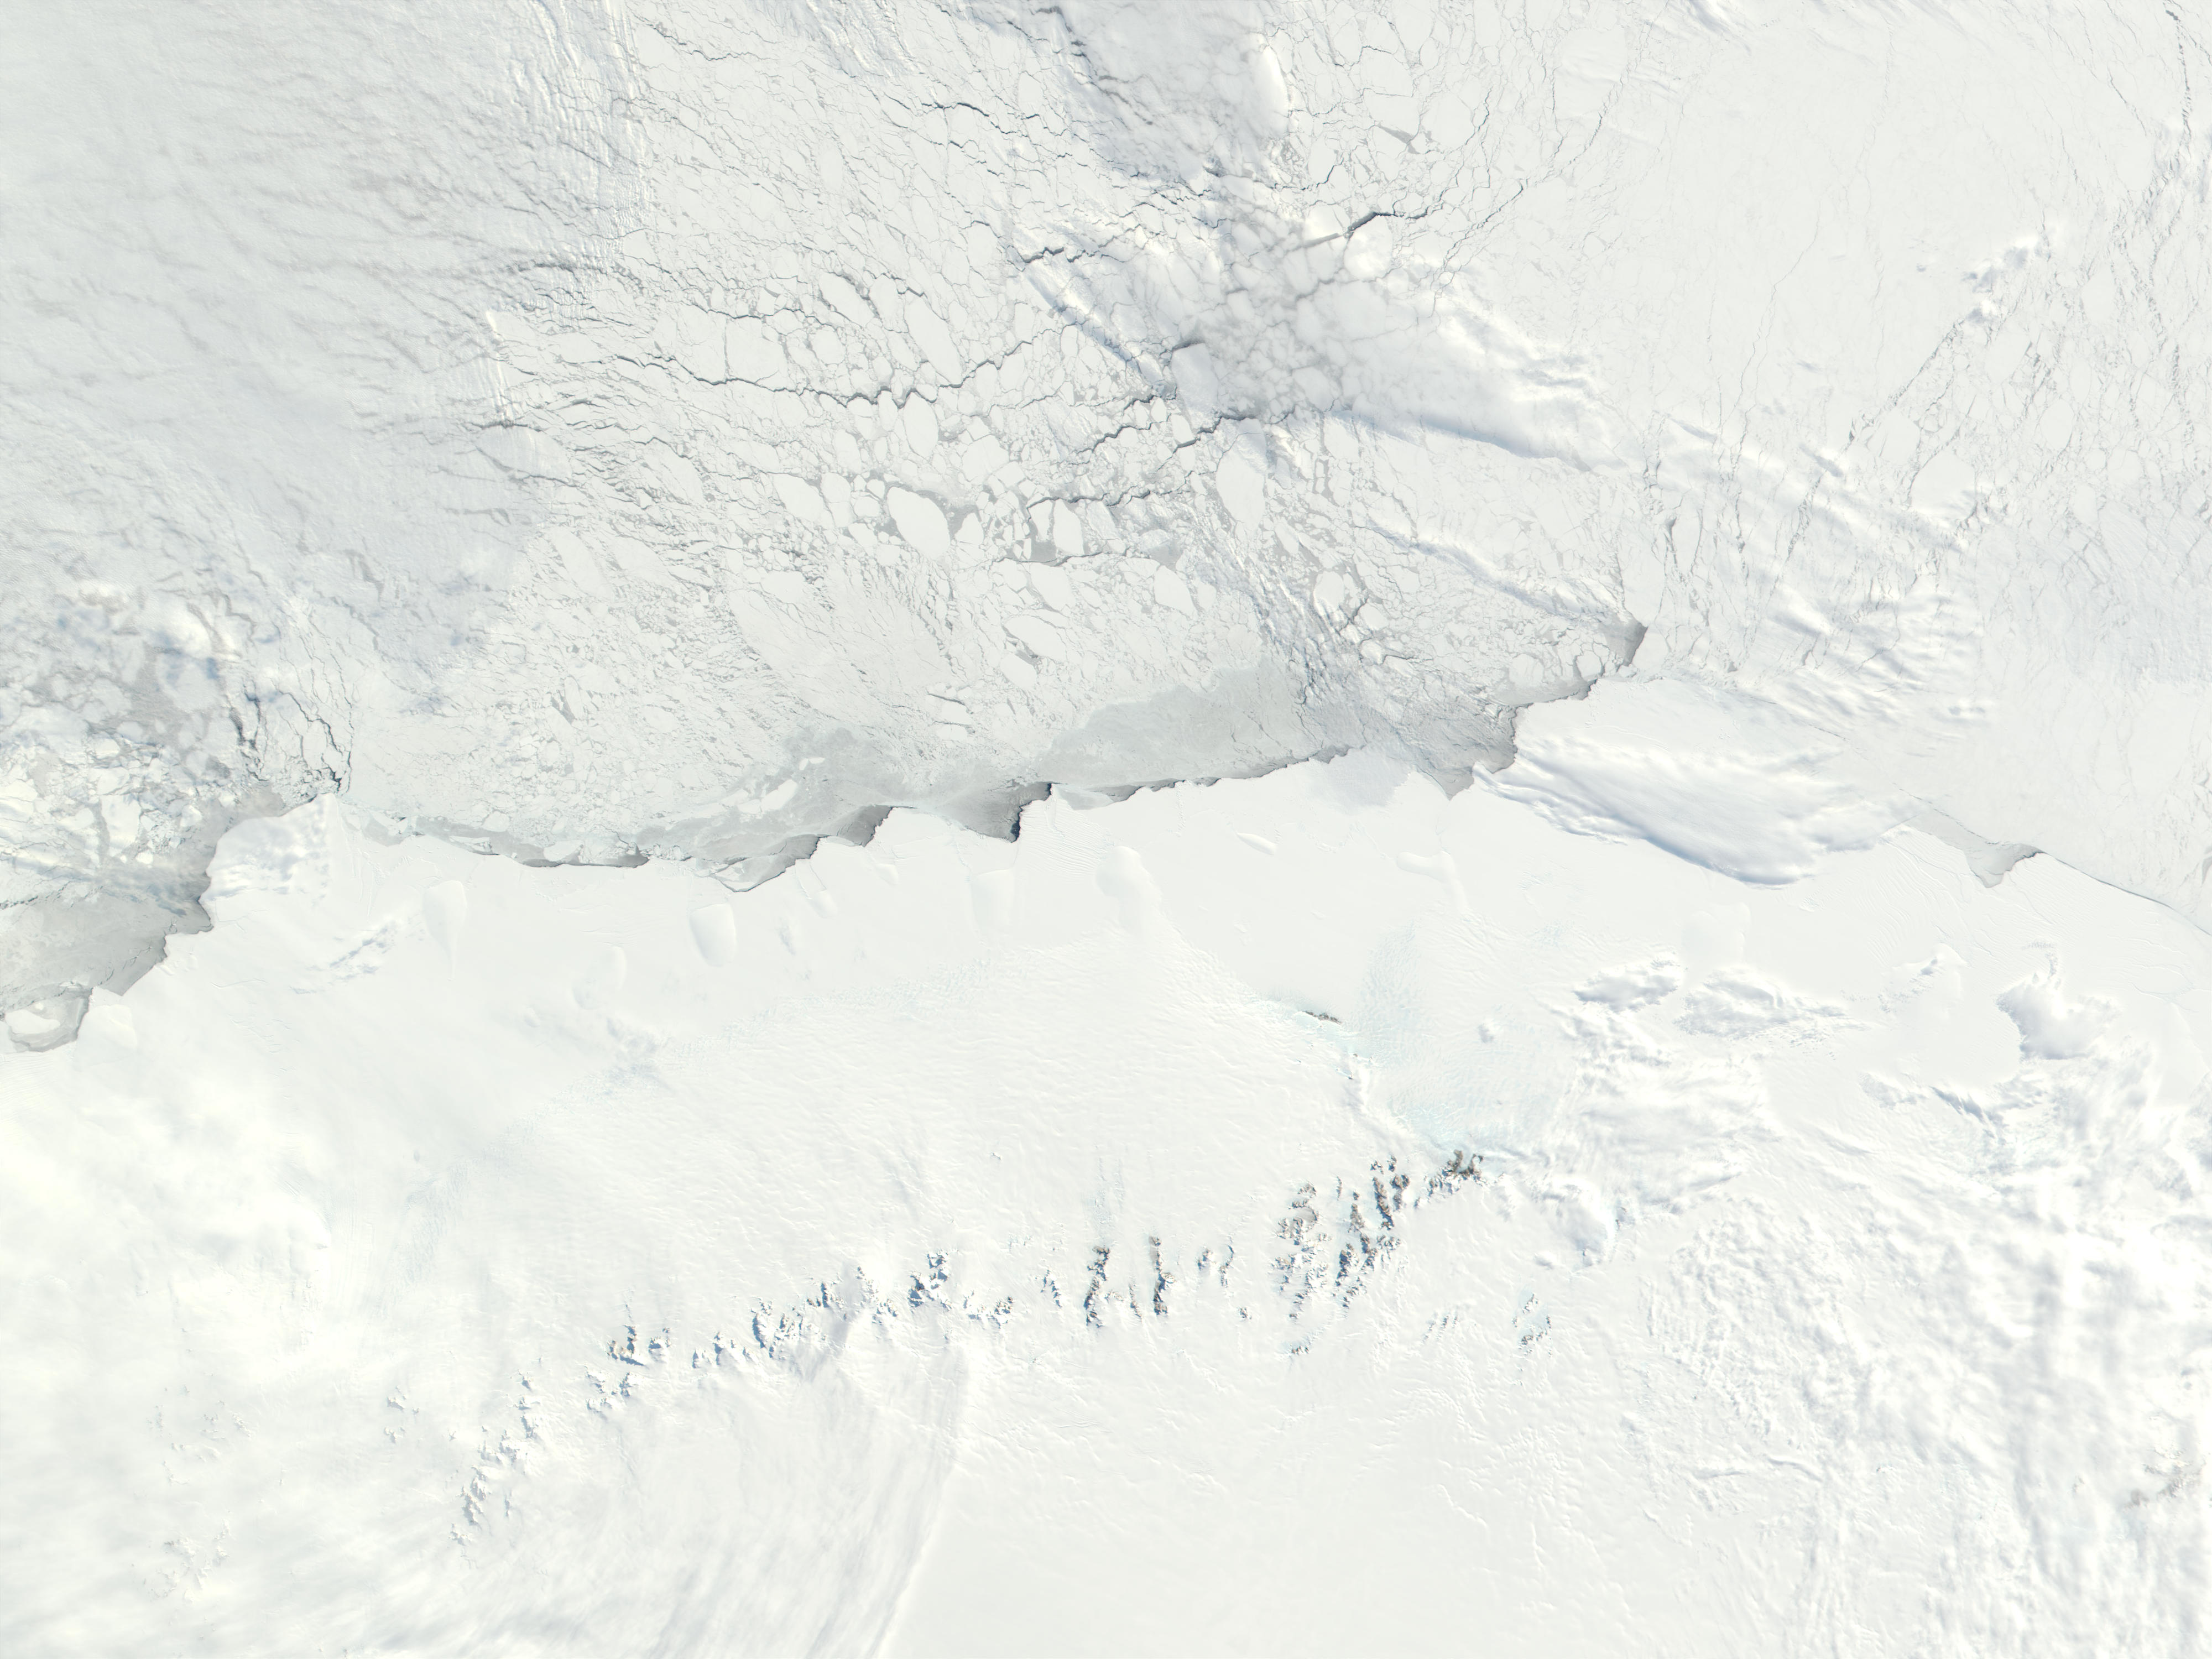 Princess Astrid Coast, Antarctica - related image preview